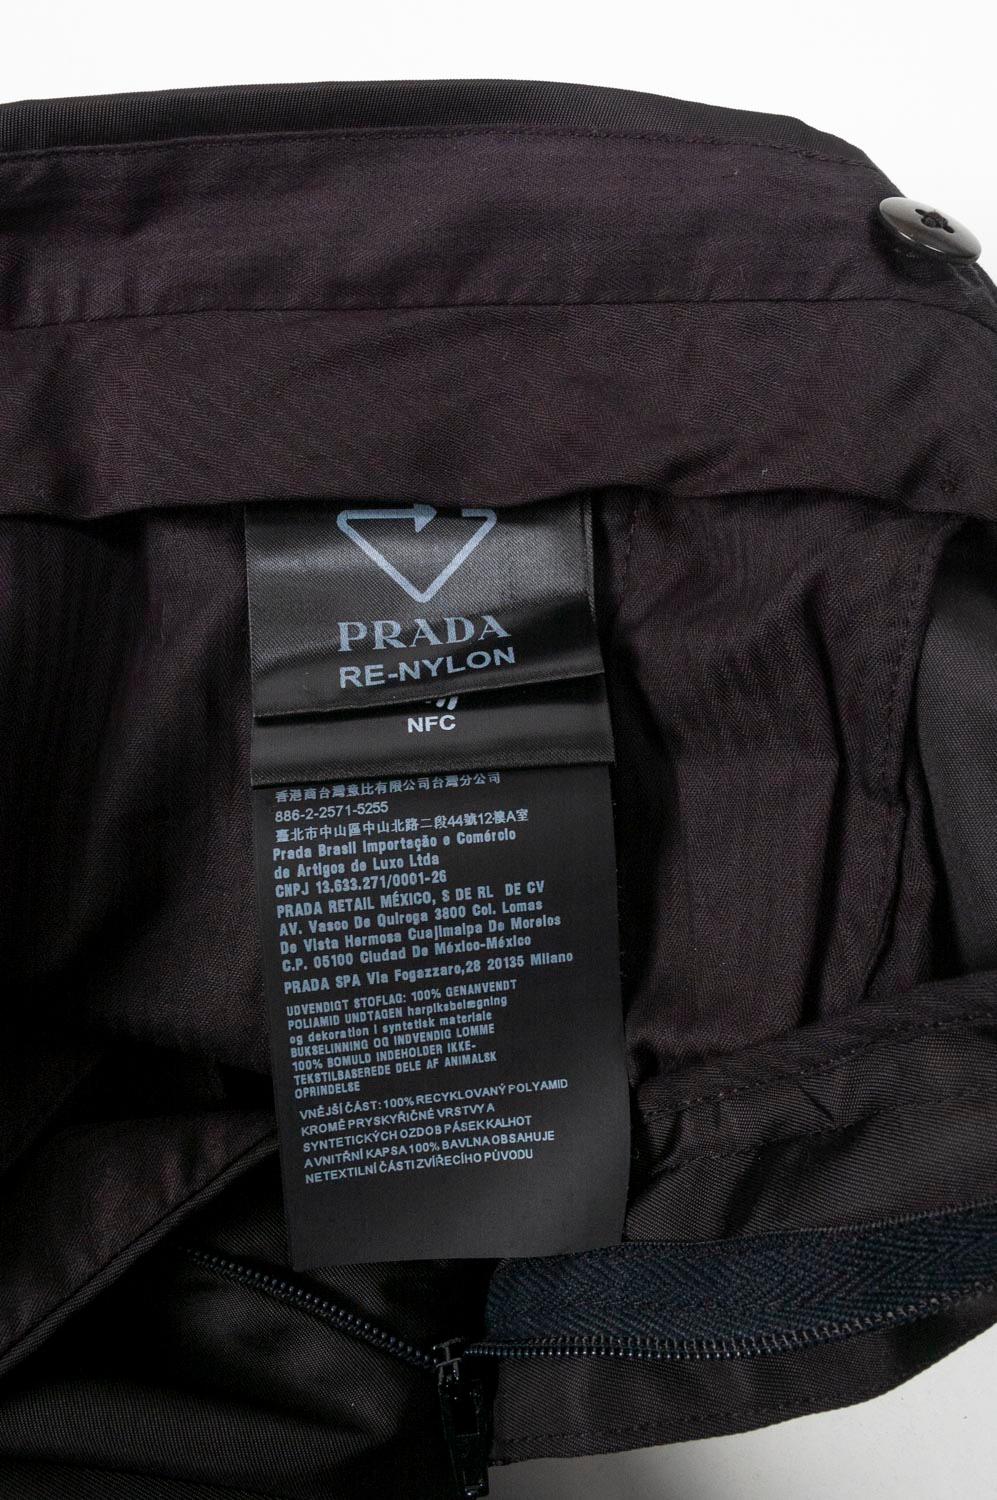 Prada Re-Nylon Men Pants Casual Size ITA46 (S/M), S317 For Sale 1